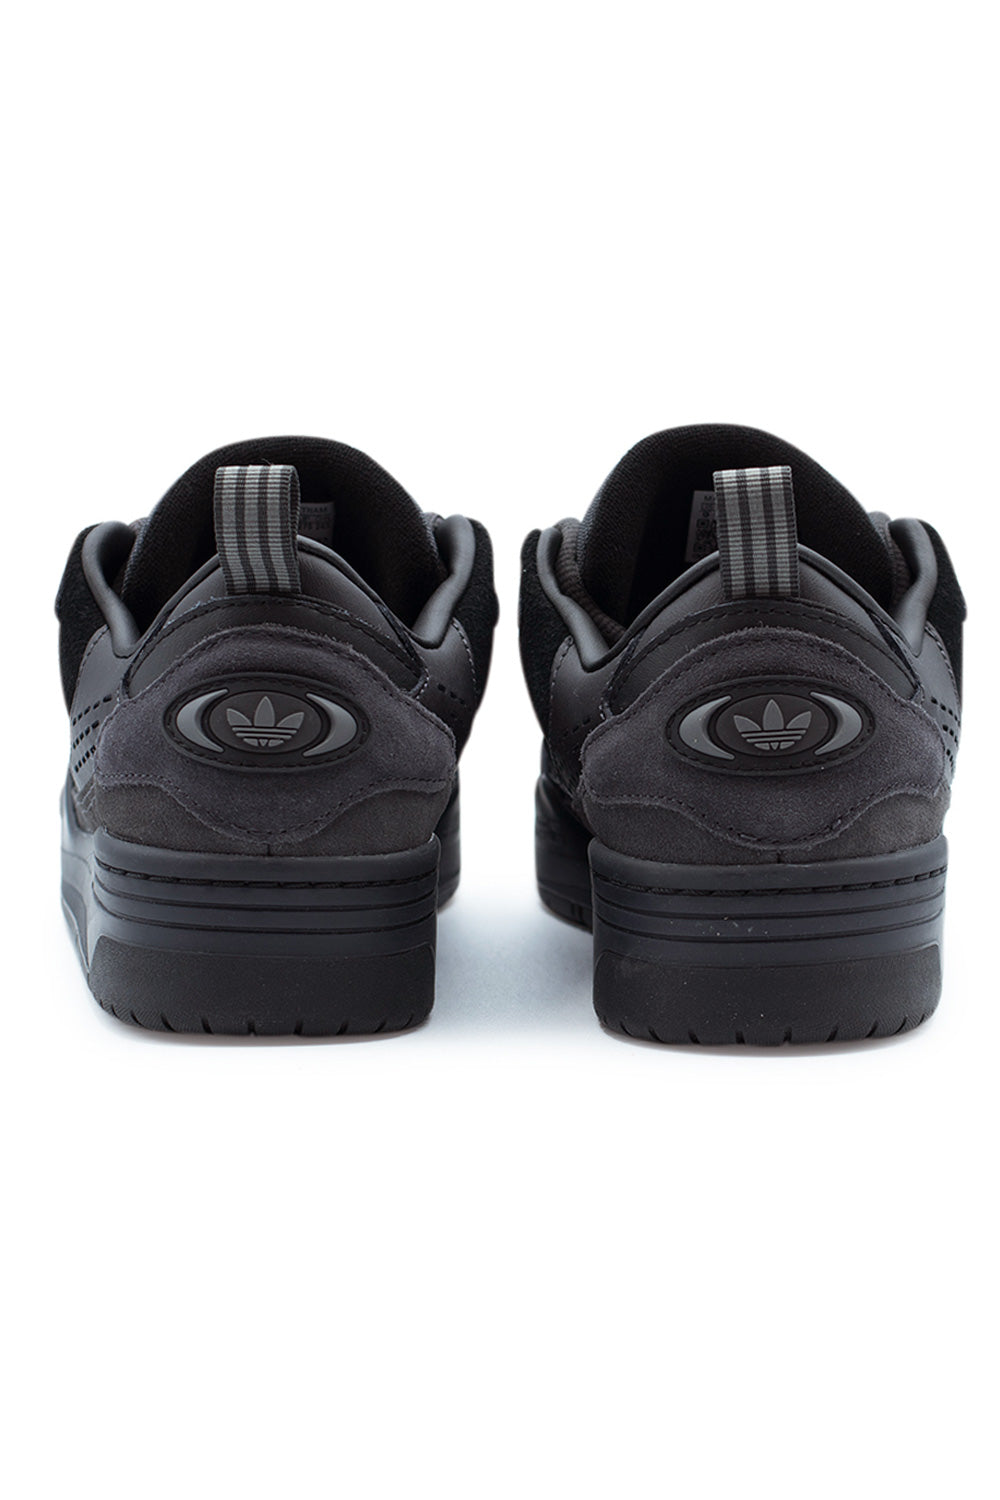 Adidas Adi2000 Shoe Core / Black / | Utility BONKERS Black Black Utility